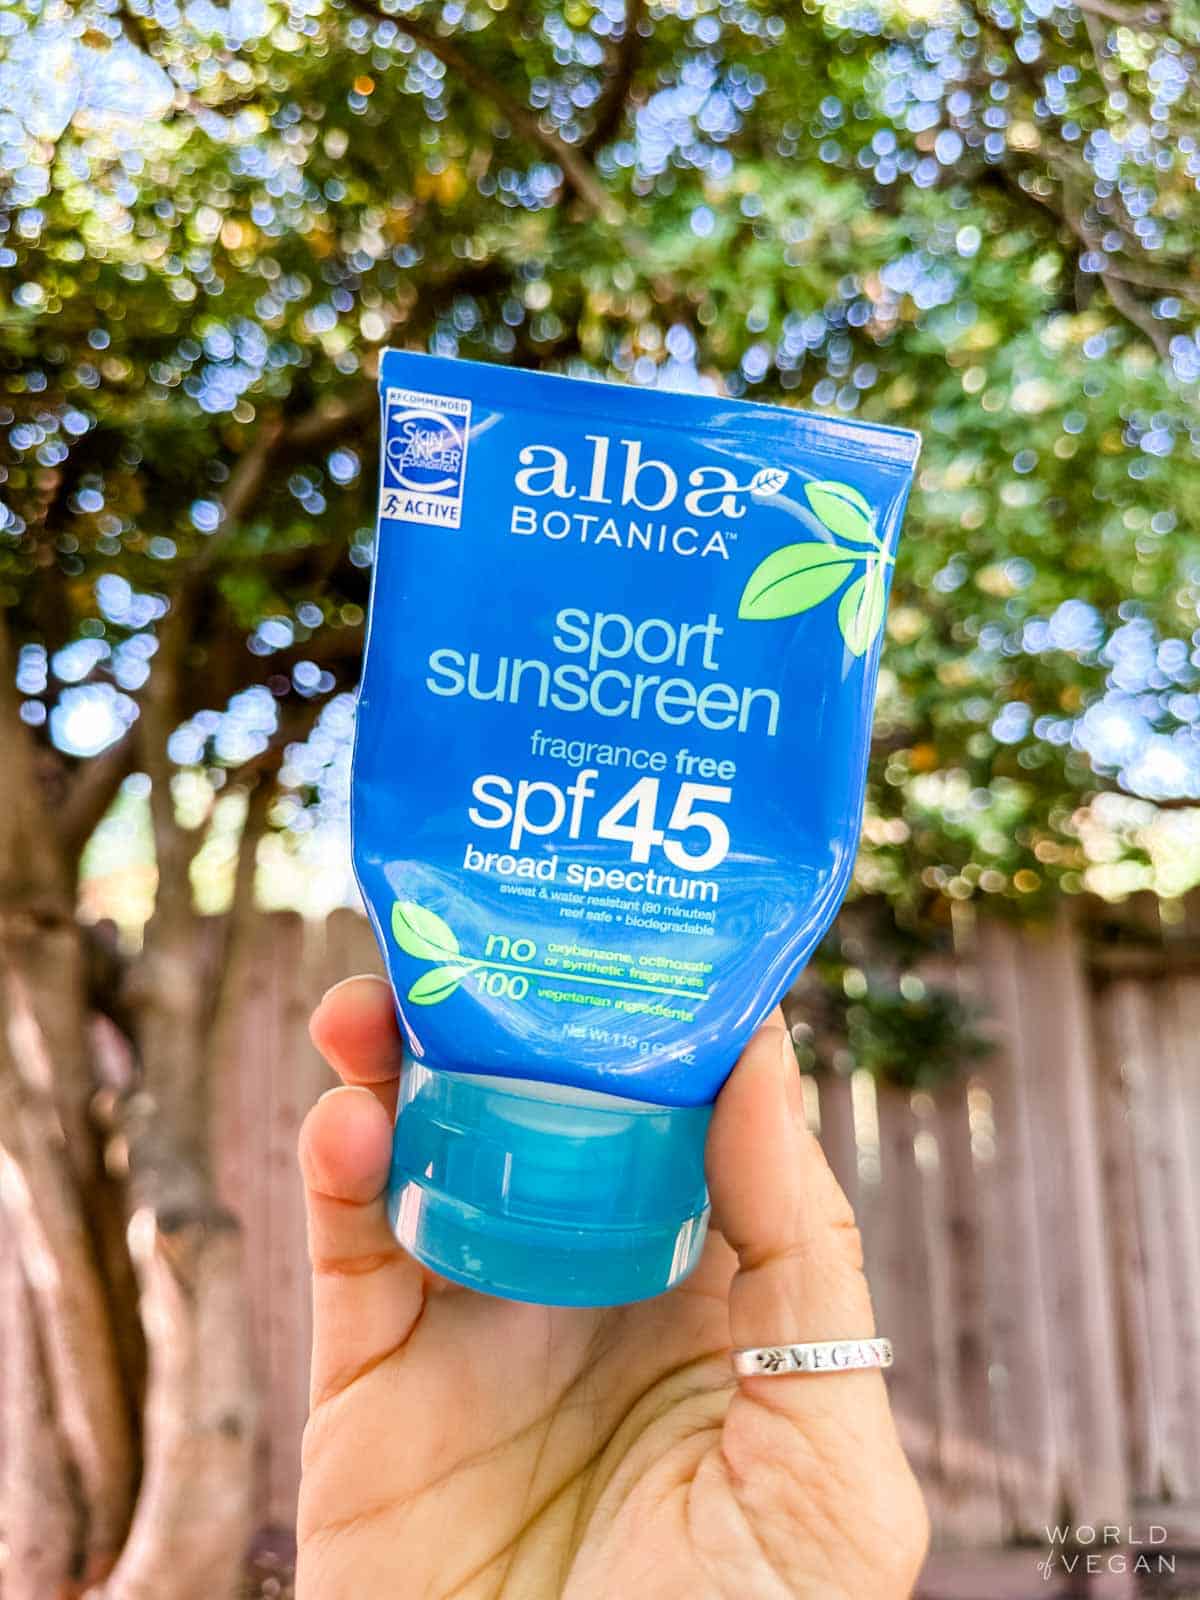 Blue container of Alba Botanica's spf 45 vegan sunscreen. 